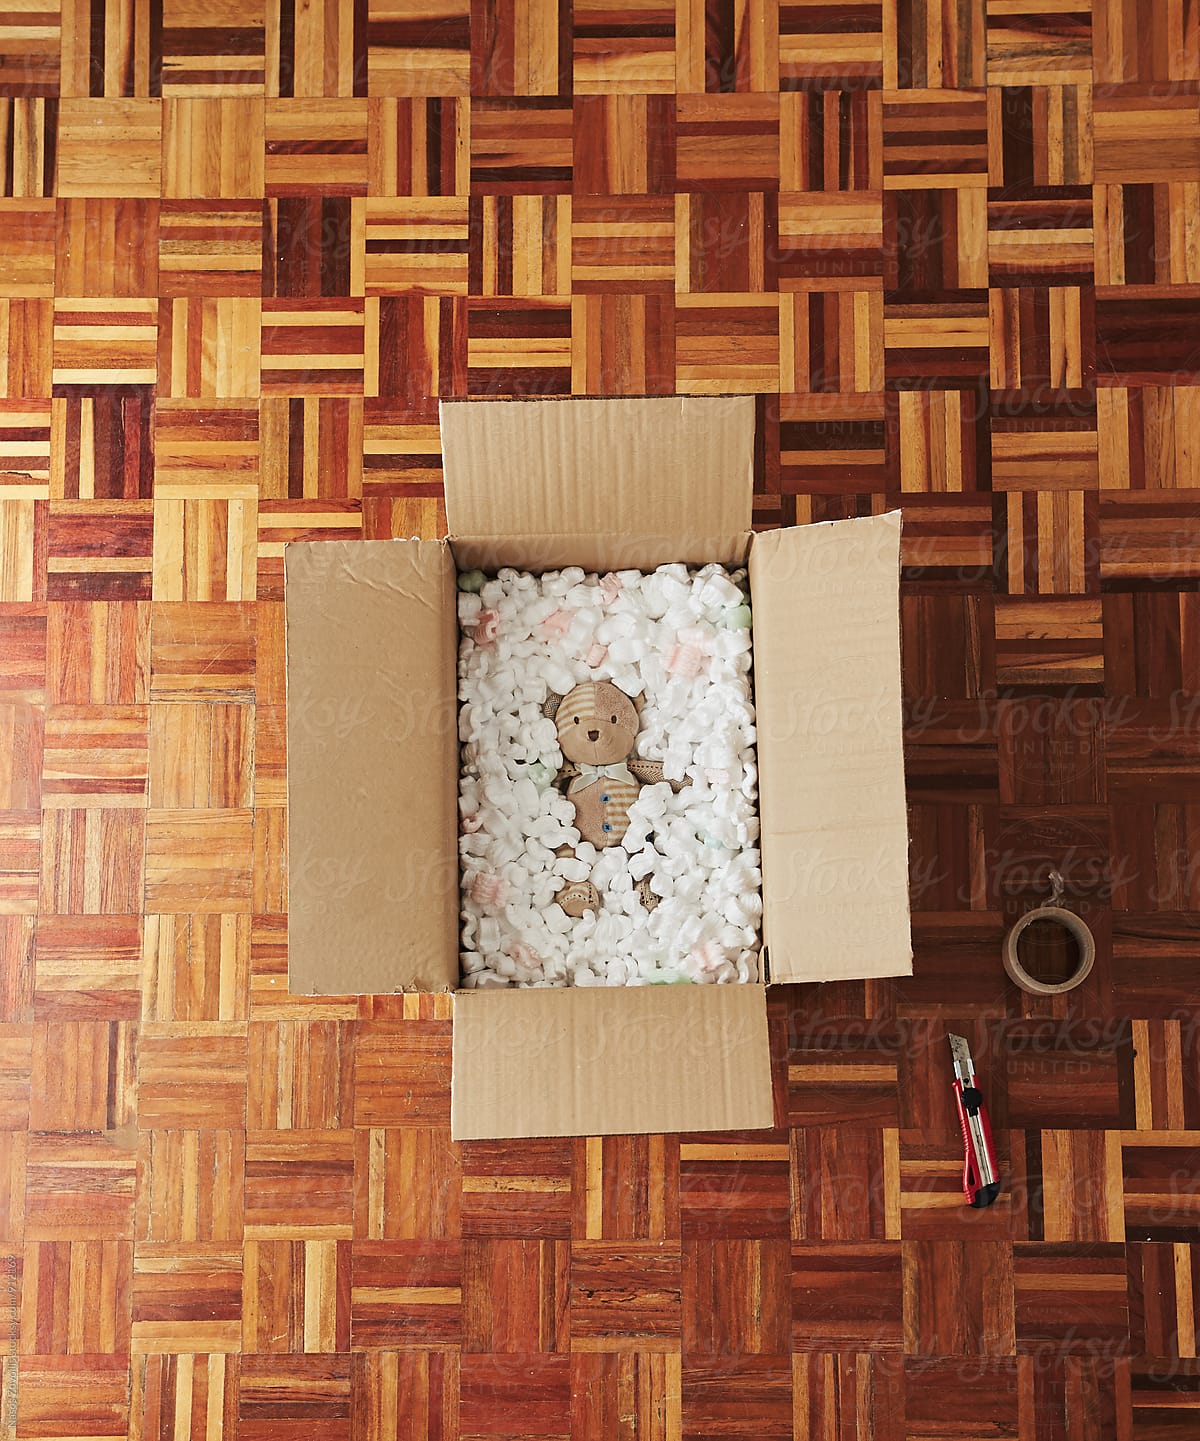 Packing teddy bear in a cardboard box